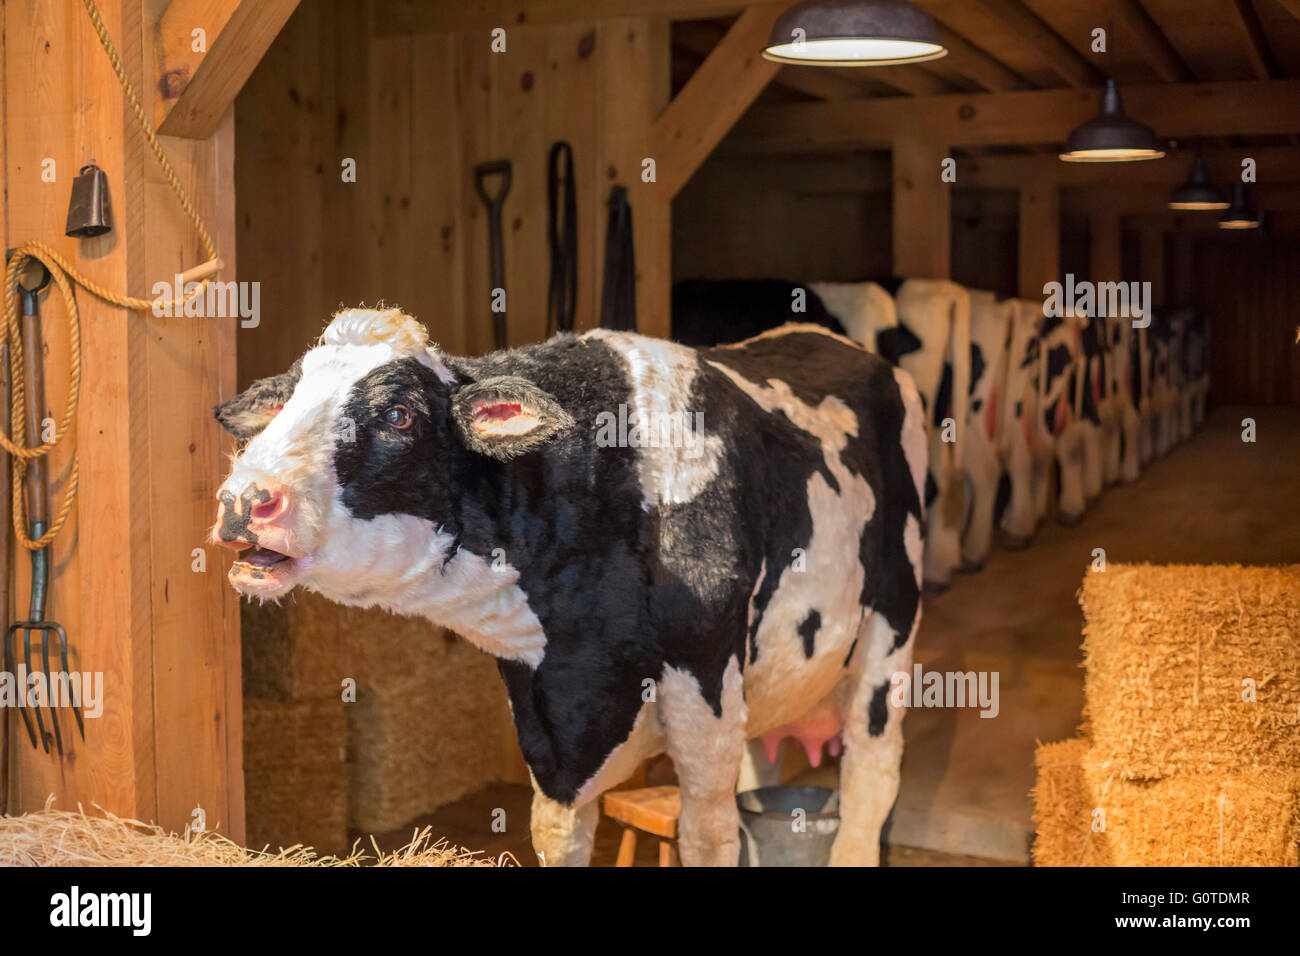 Charlotte, North Carolina - A talking cow greets visitors arriving at the Billy Graham Library. Stock Photo